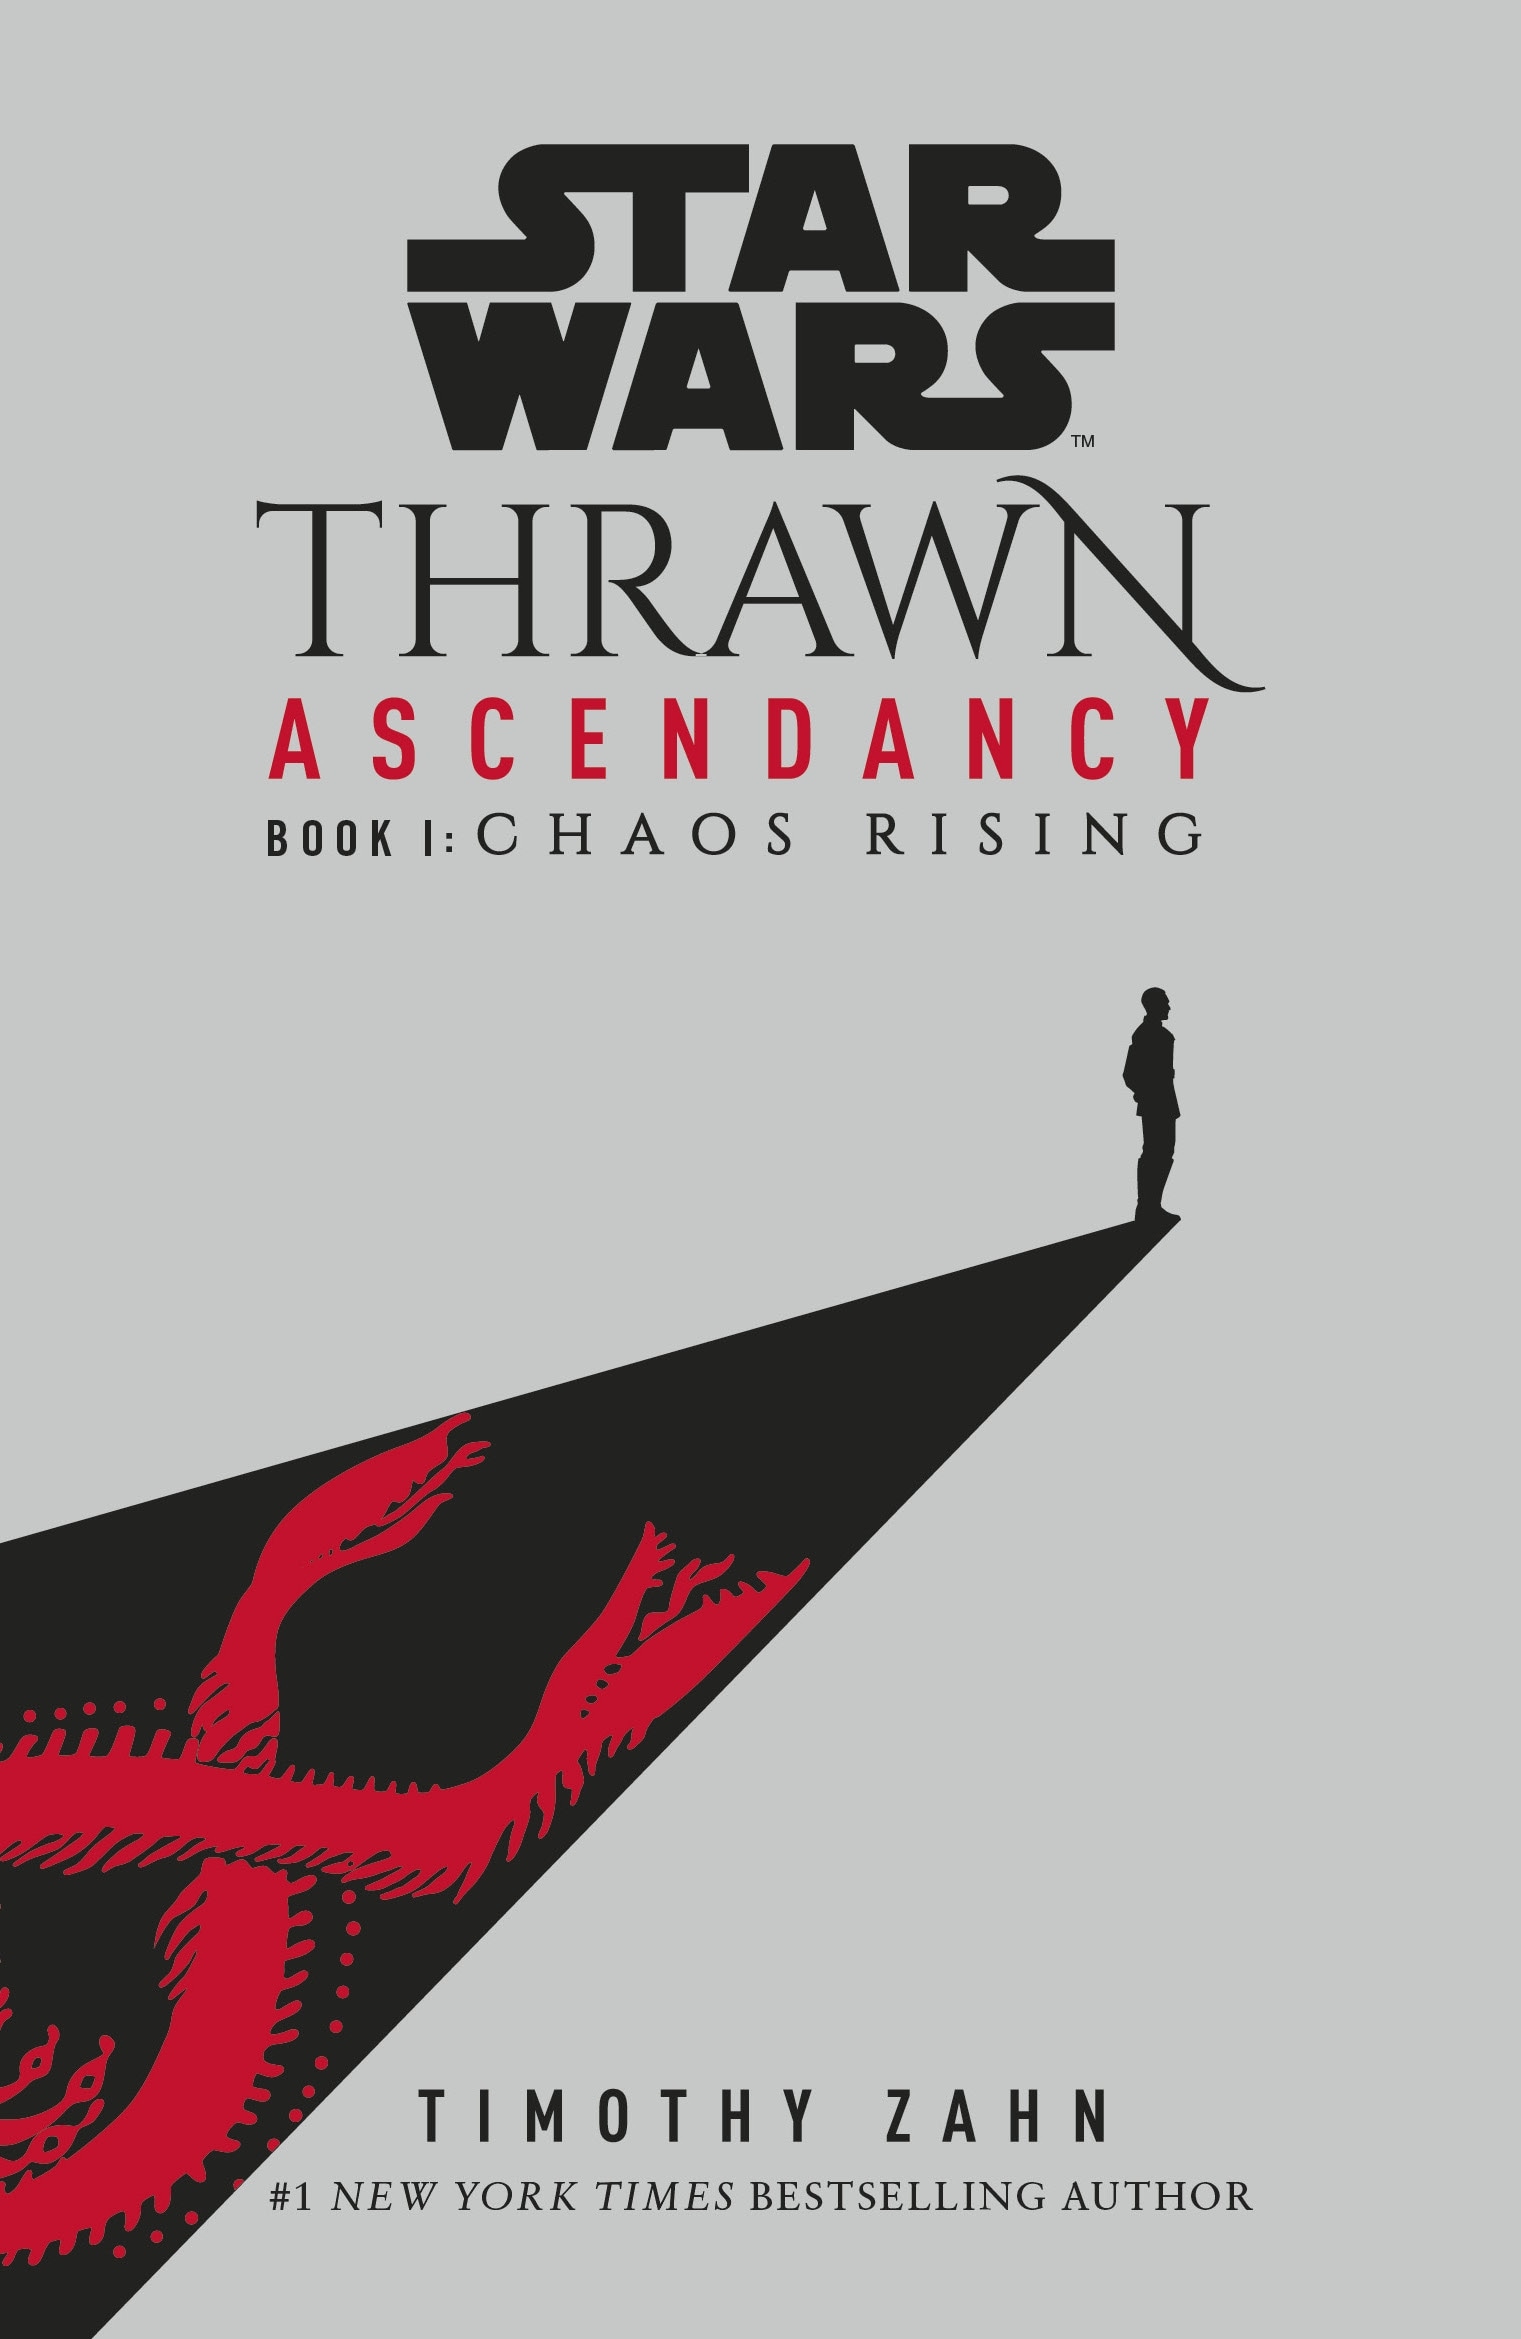 Book “Star Wars: Thrawn Ascendancy” by Timothy Zahn — April 29, 2021